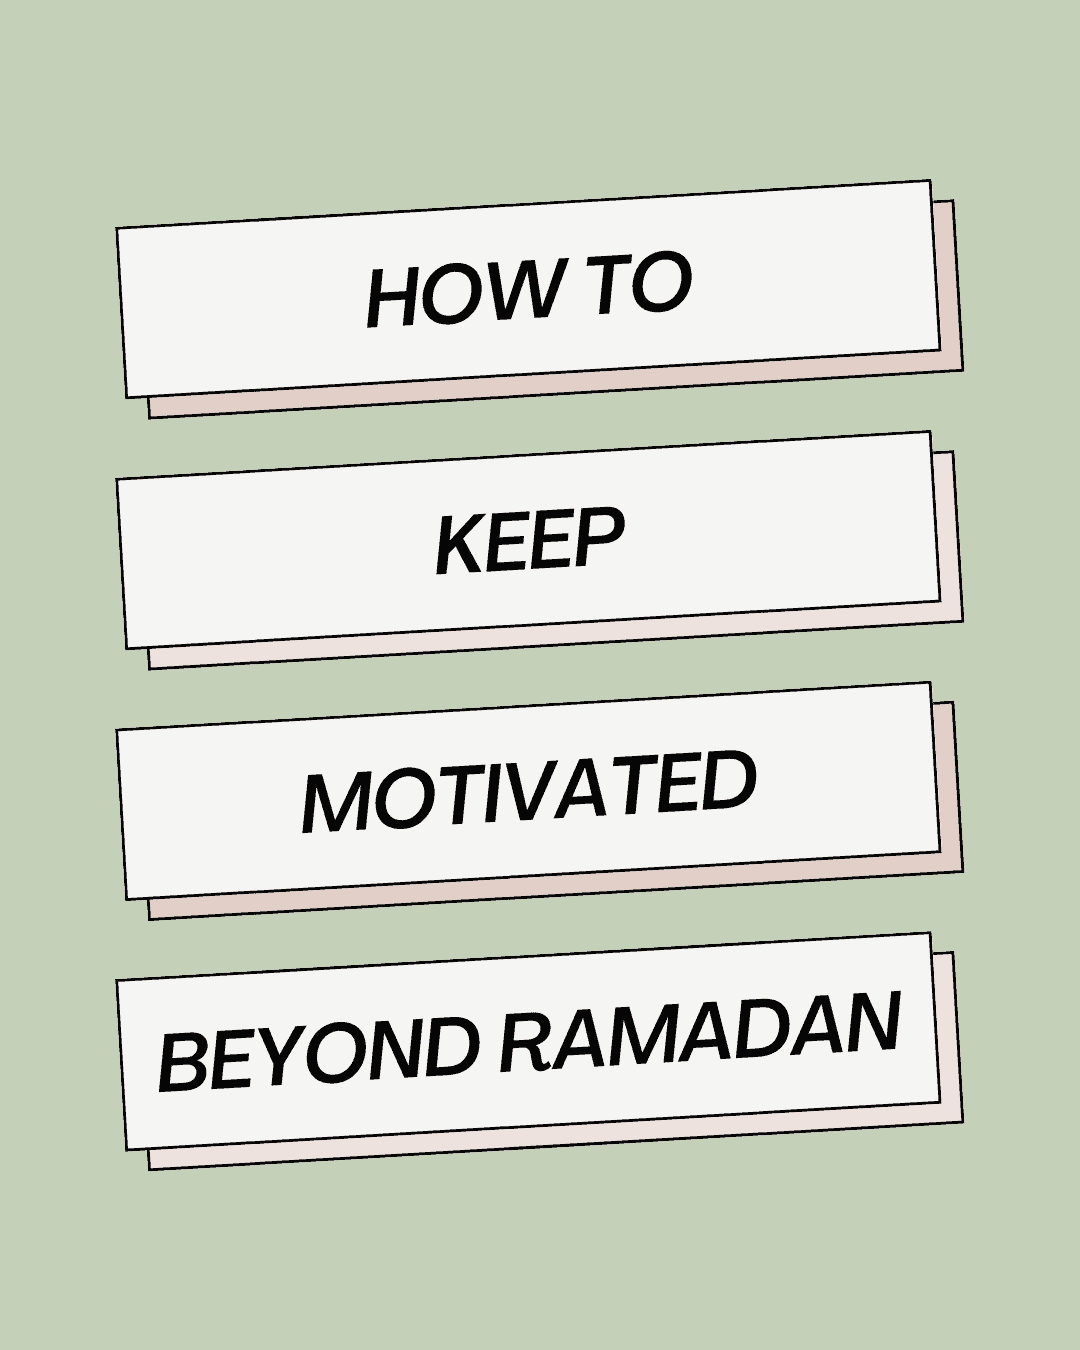 Keeping motivated beyond Ramadan